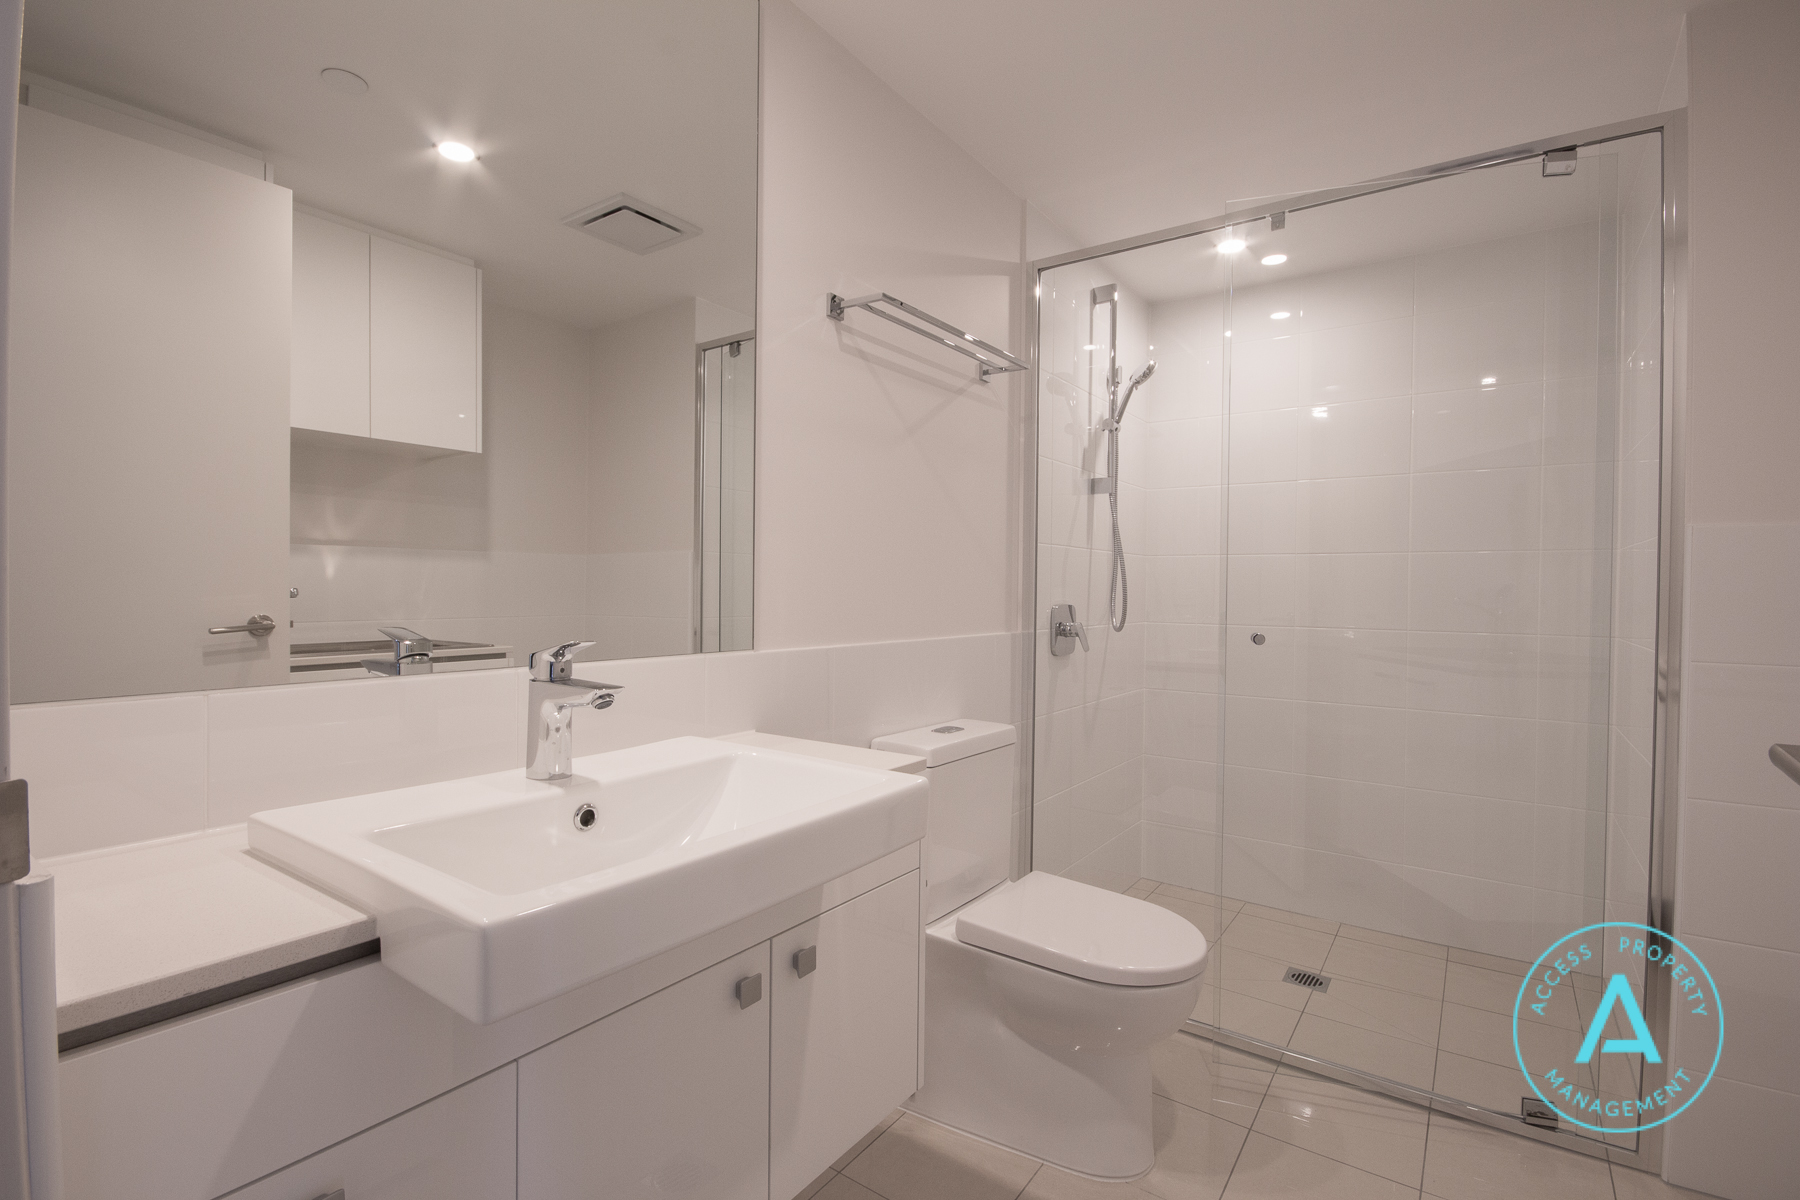 68/189 Adelaide Terrace bathroom